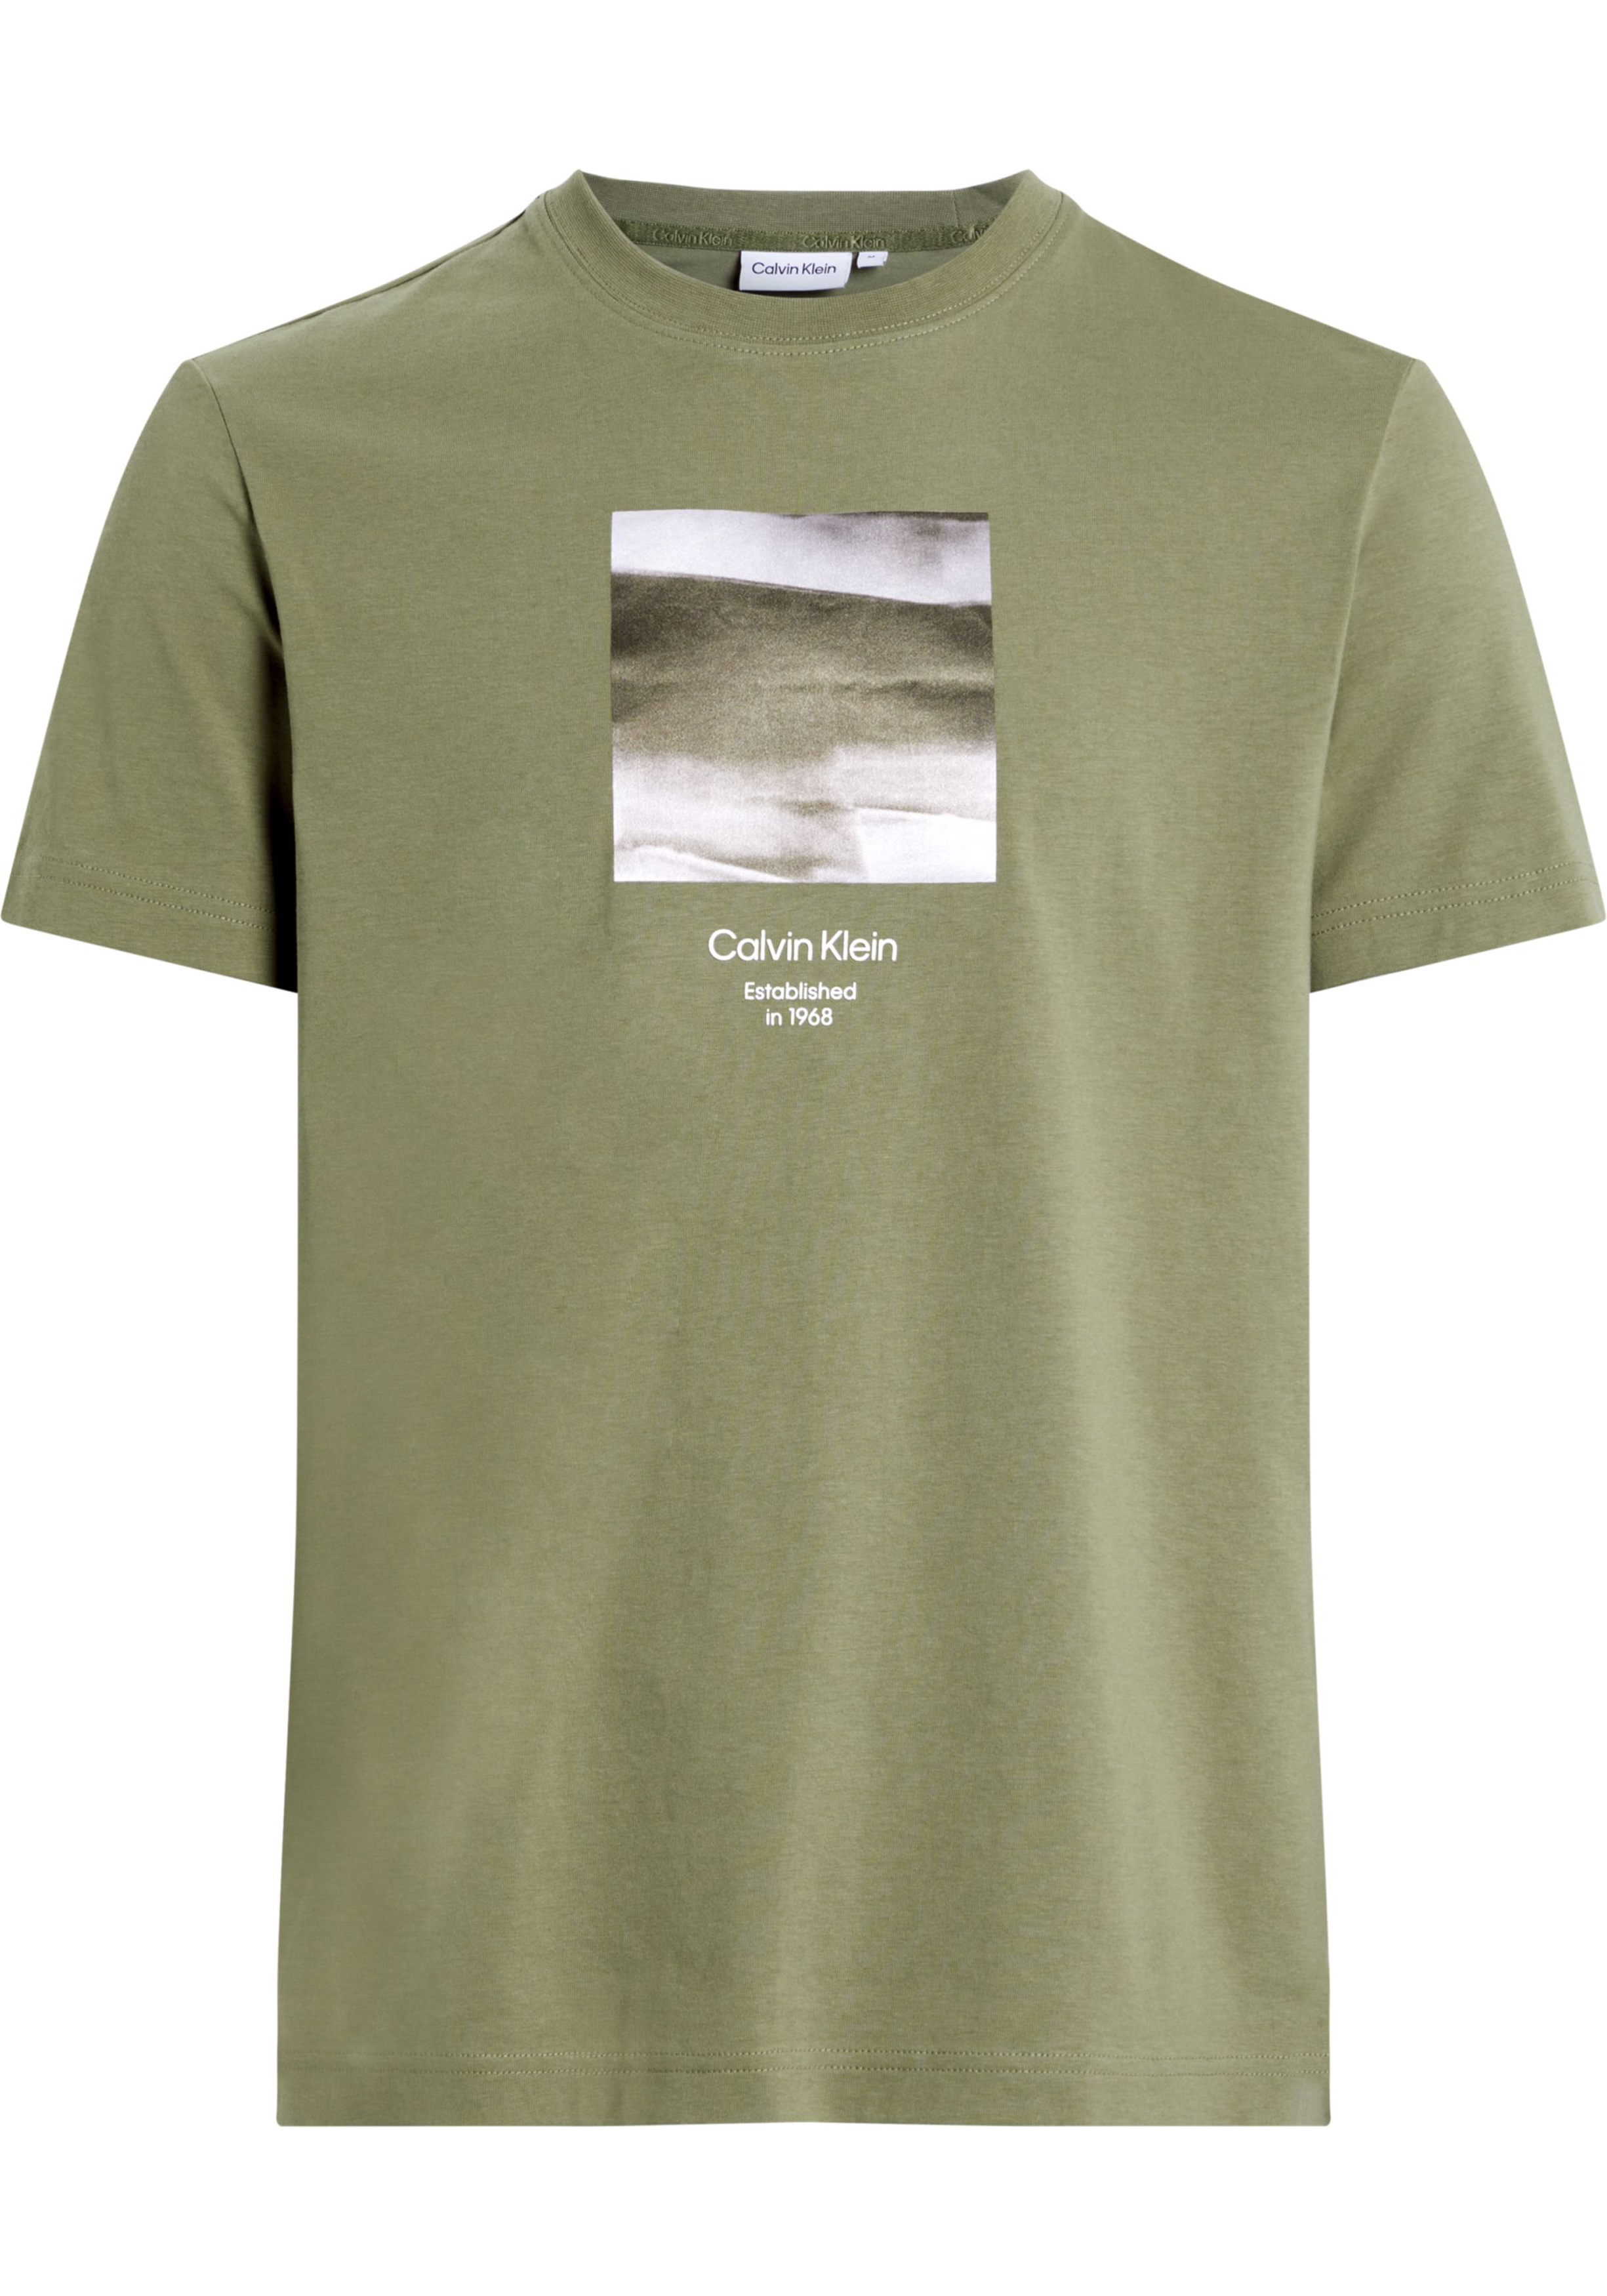 Calvin Klein Diffused Graphic T-shirt, heren T-shirt korte mouw O-hals, groen dessin